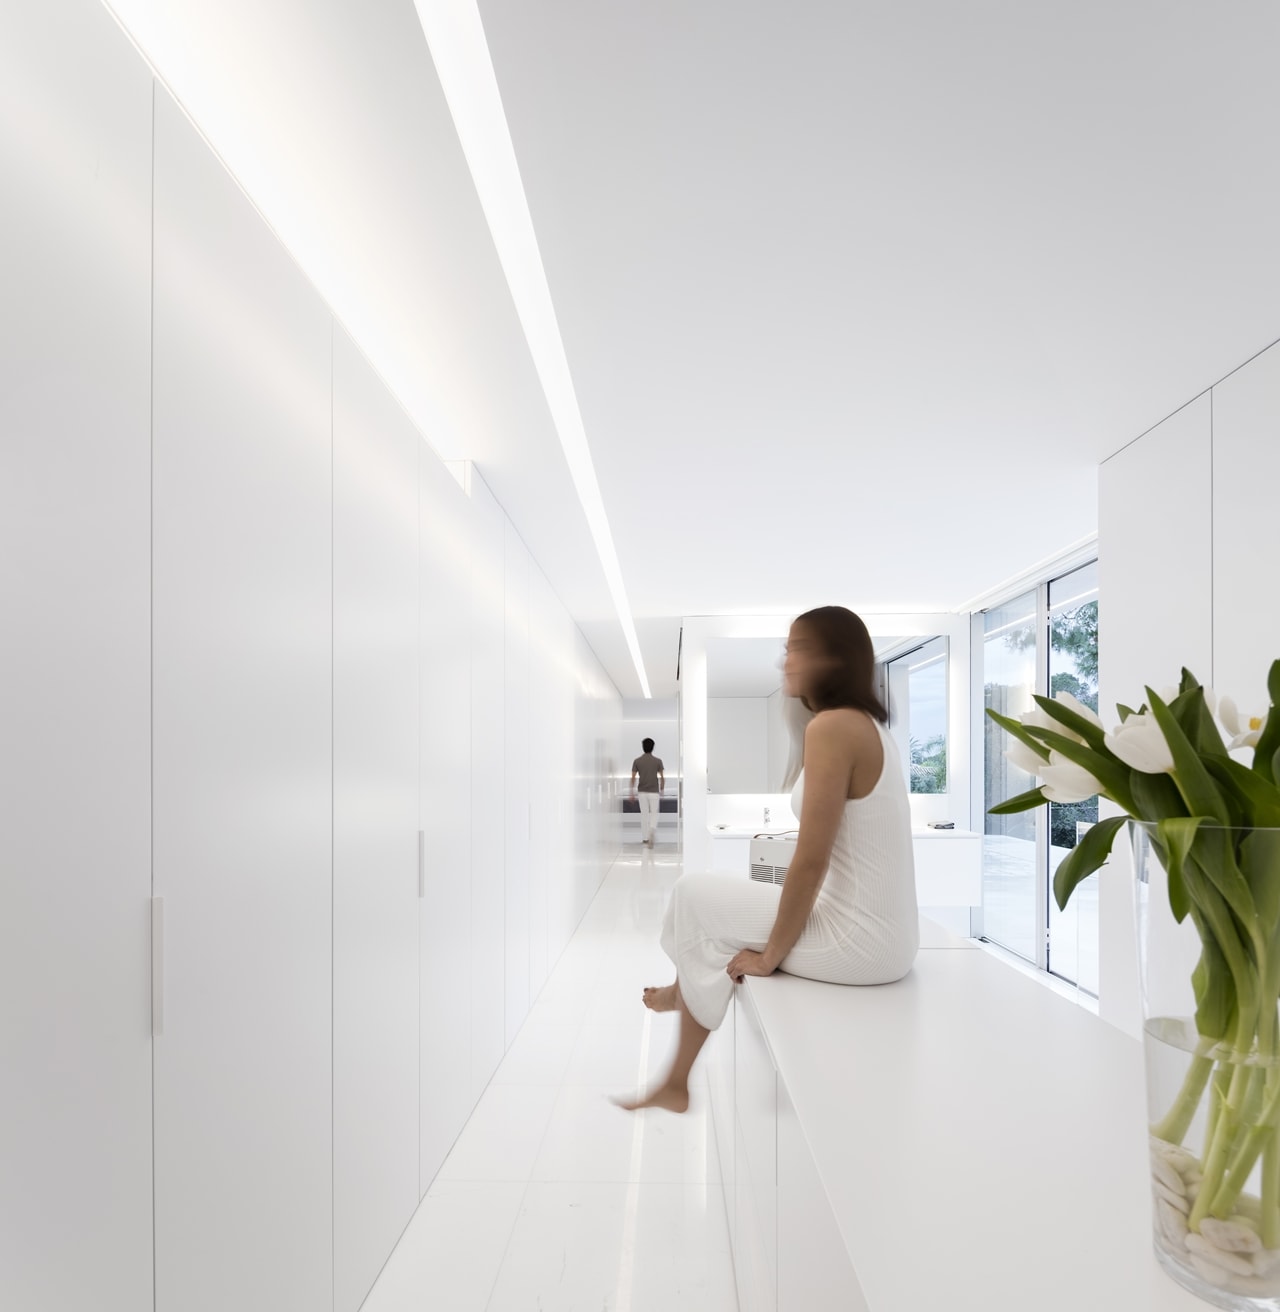 Minimalist kitchen in minimalist house designed by Fran Silvestre Architects